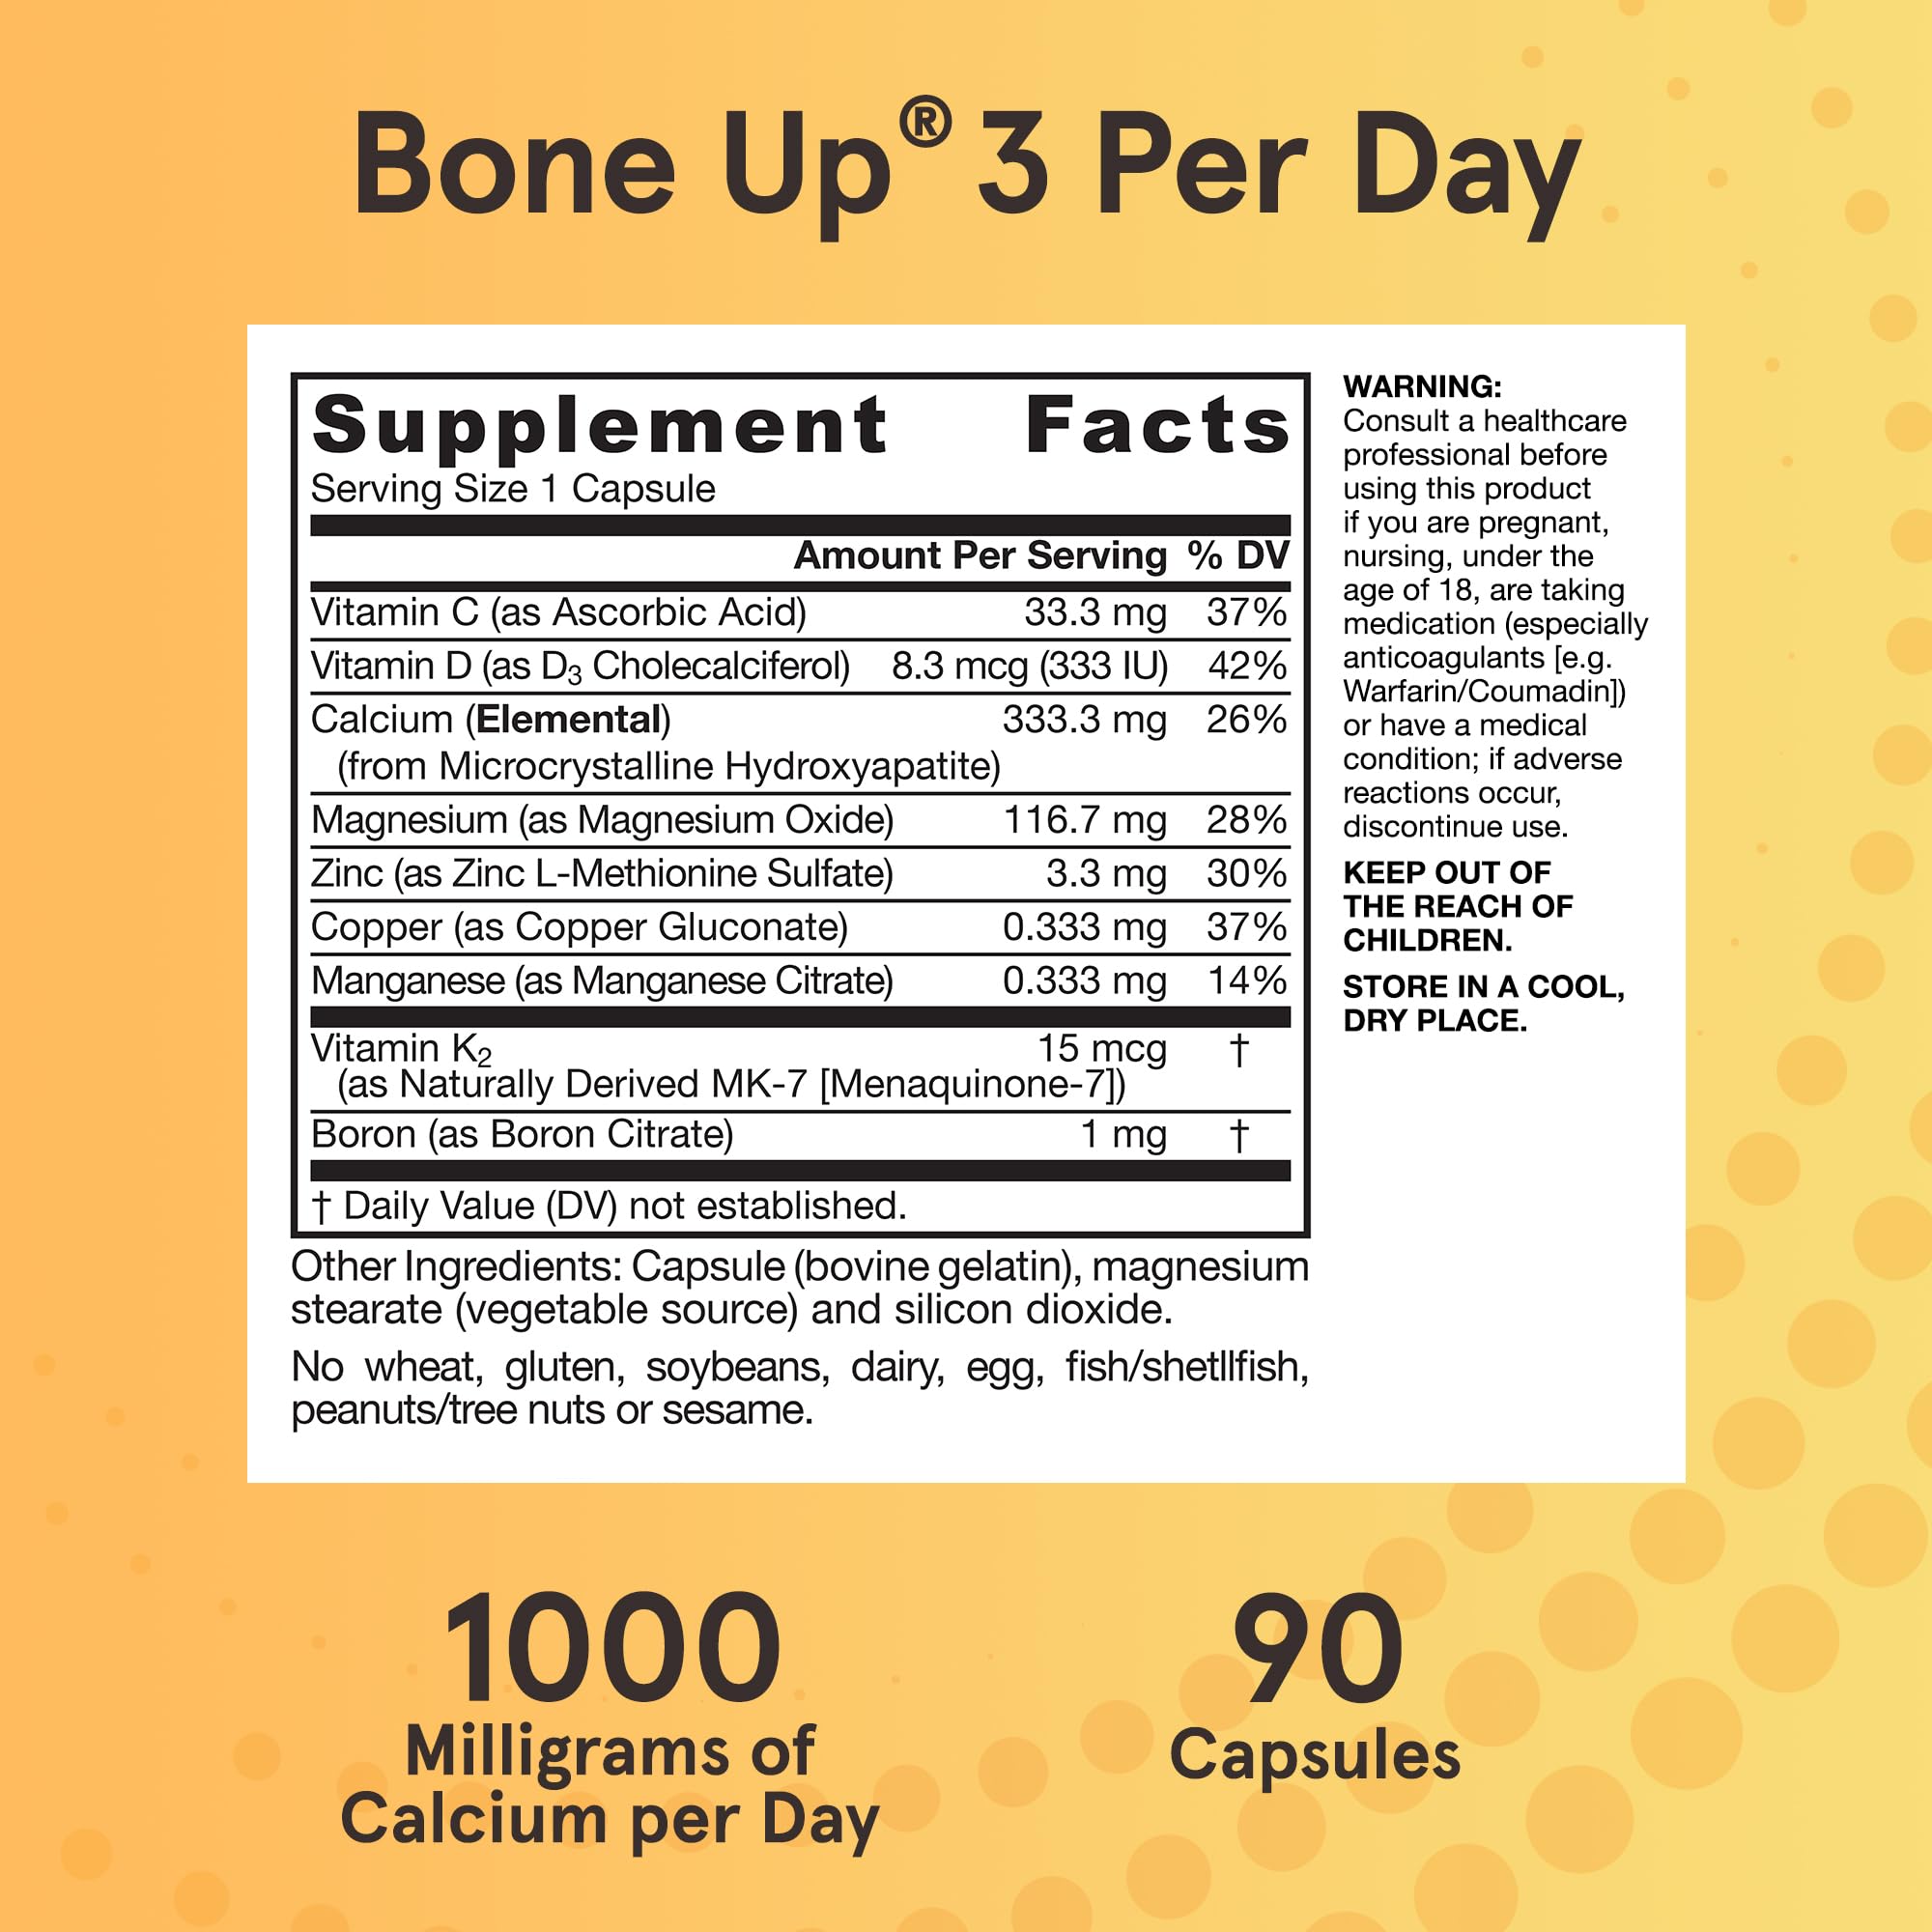 Jarrow Formulas BoneUp Three Per Day - 90 Capsules - 30 Servings - For Bone Support & Skeletal Nutrition - Includes Naturally Derived Vitamin D3, K2 (as MK-7) & 1000 mg Calcium - Gluten Free - Non-GMO